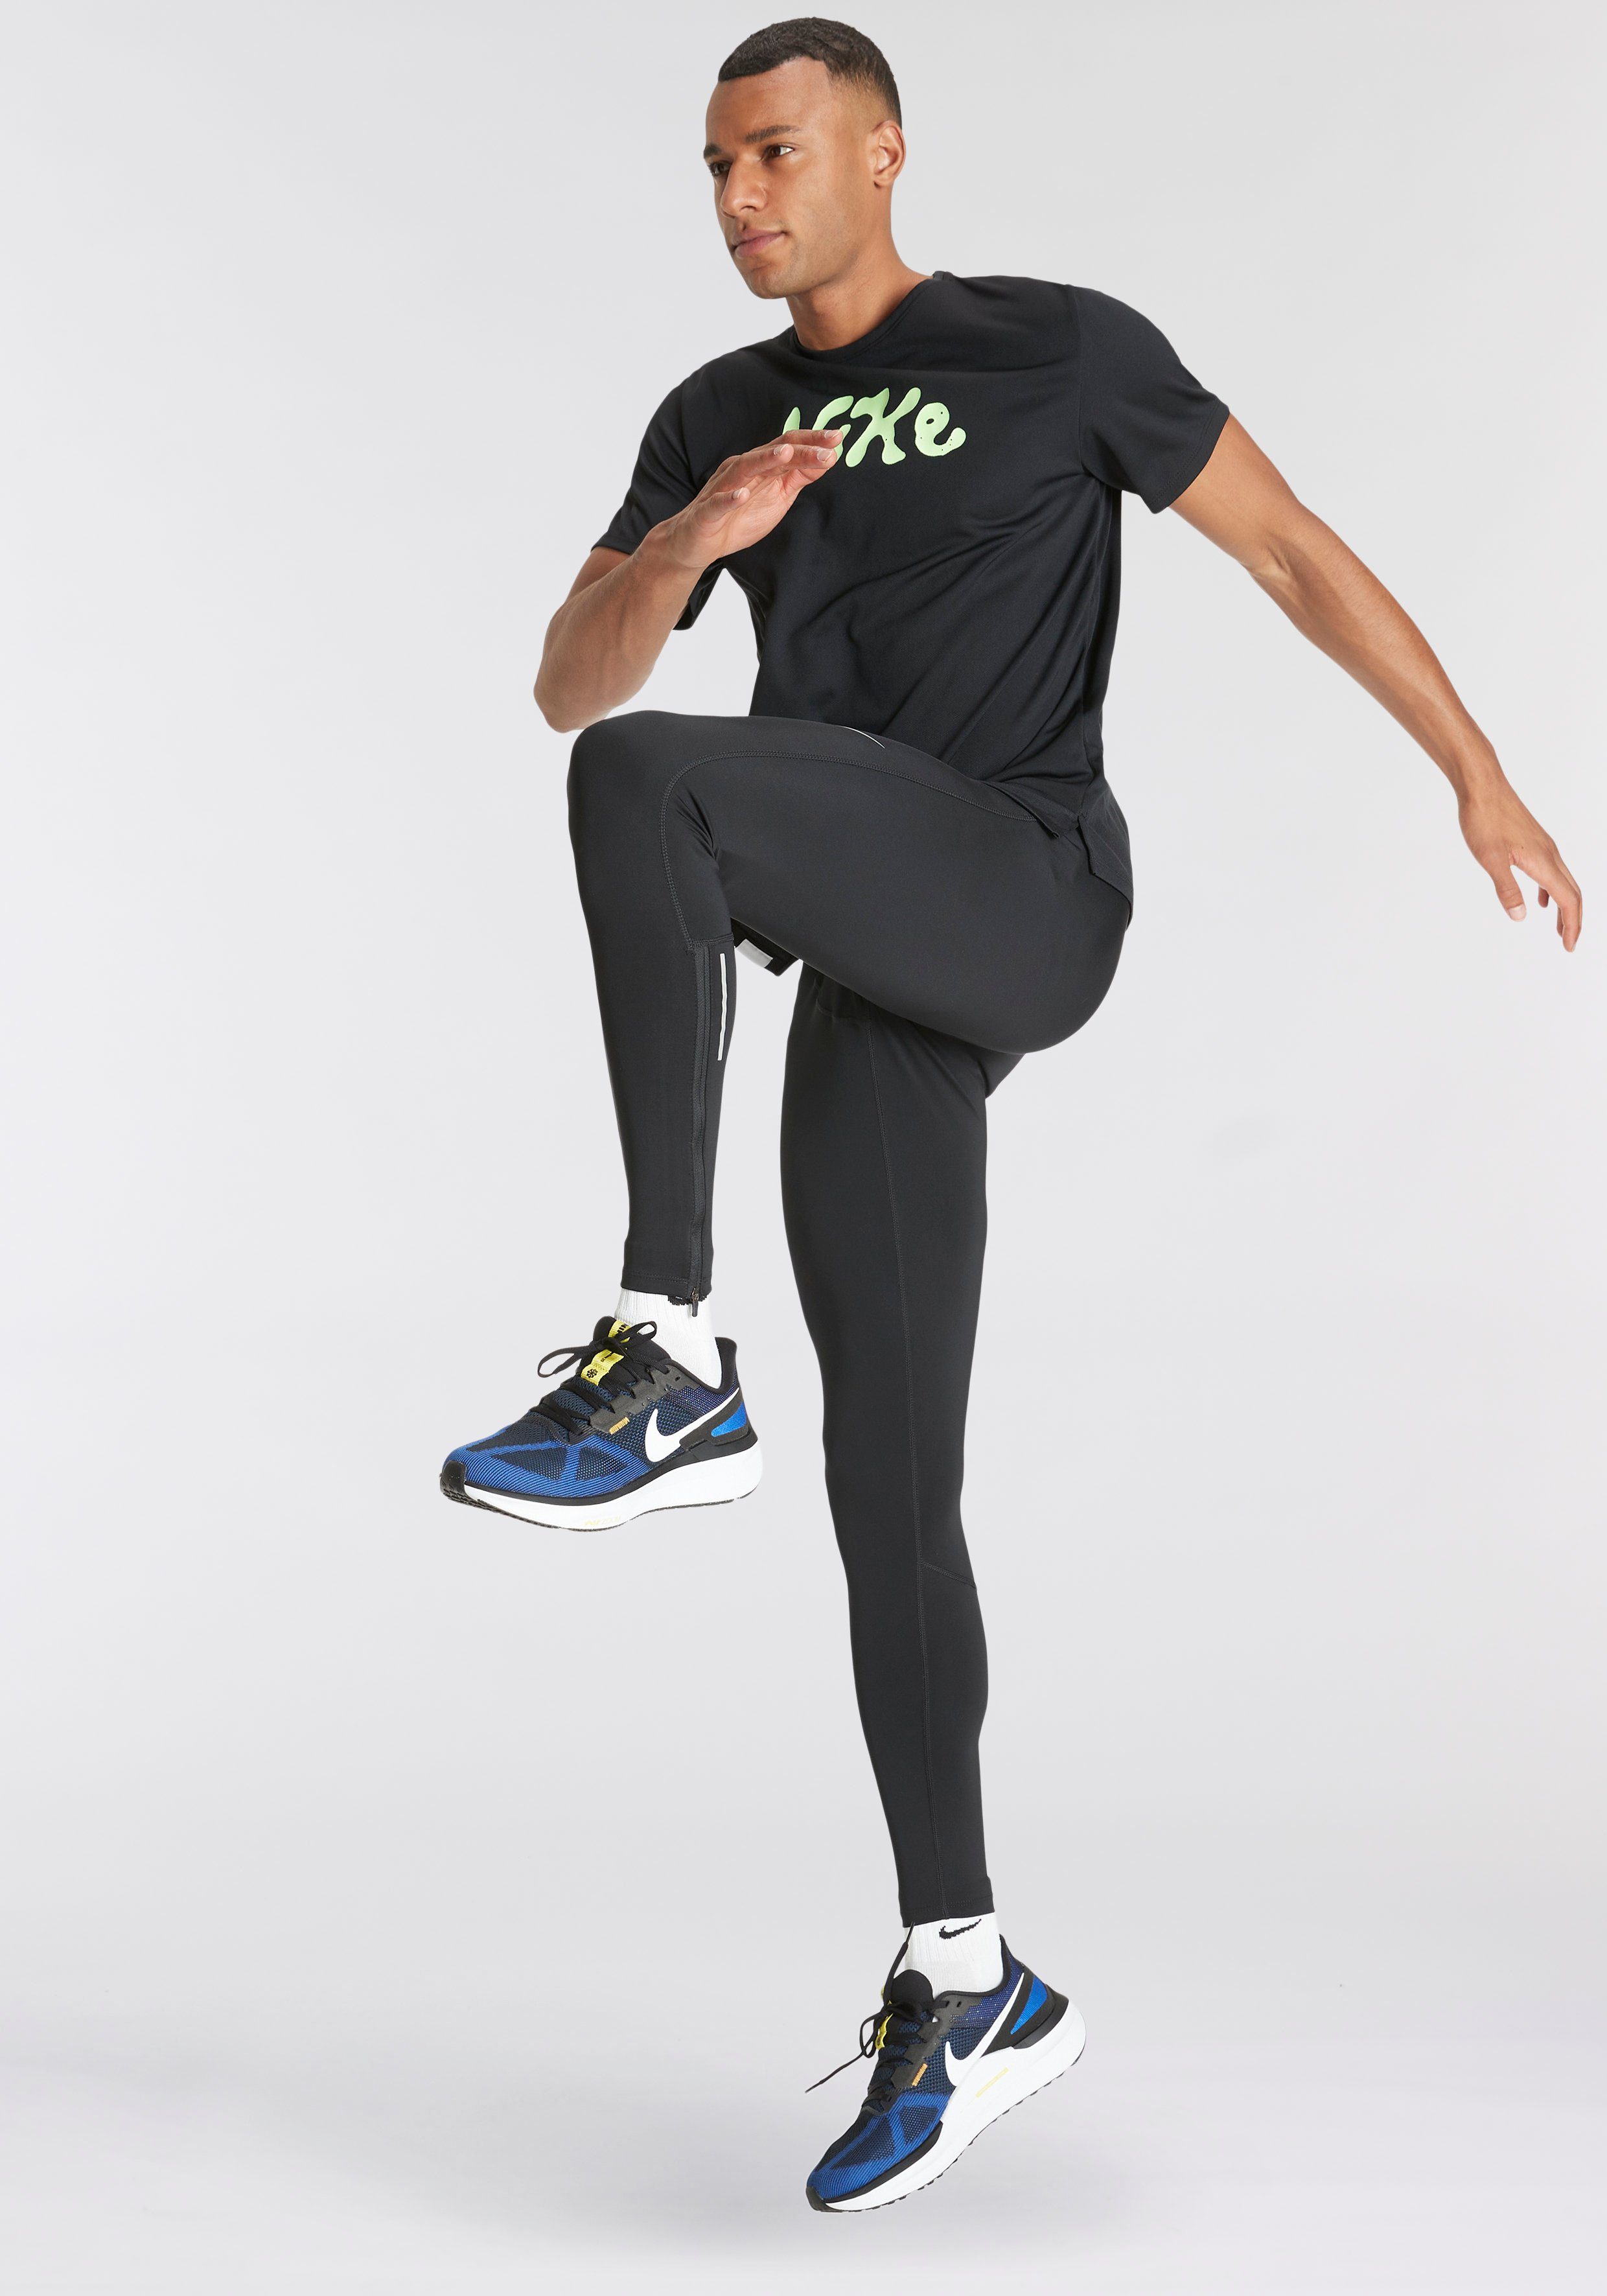 SHORT-SLEEVE ' DRI-FIT STUDIO UV Laufshirt MILER RUNNING MEN'S TOP Nike